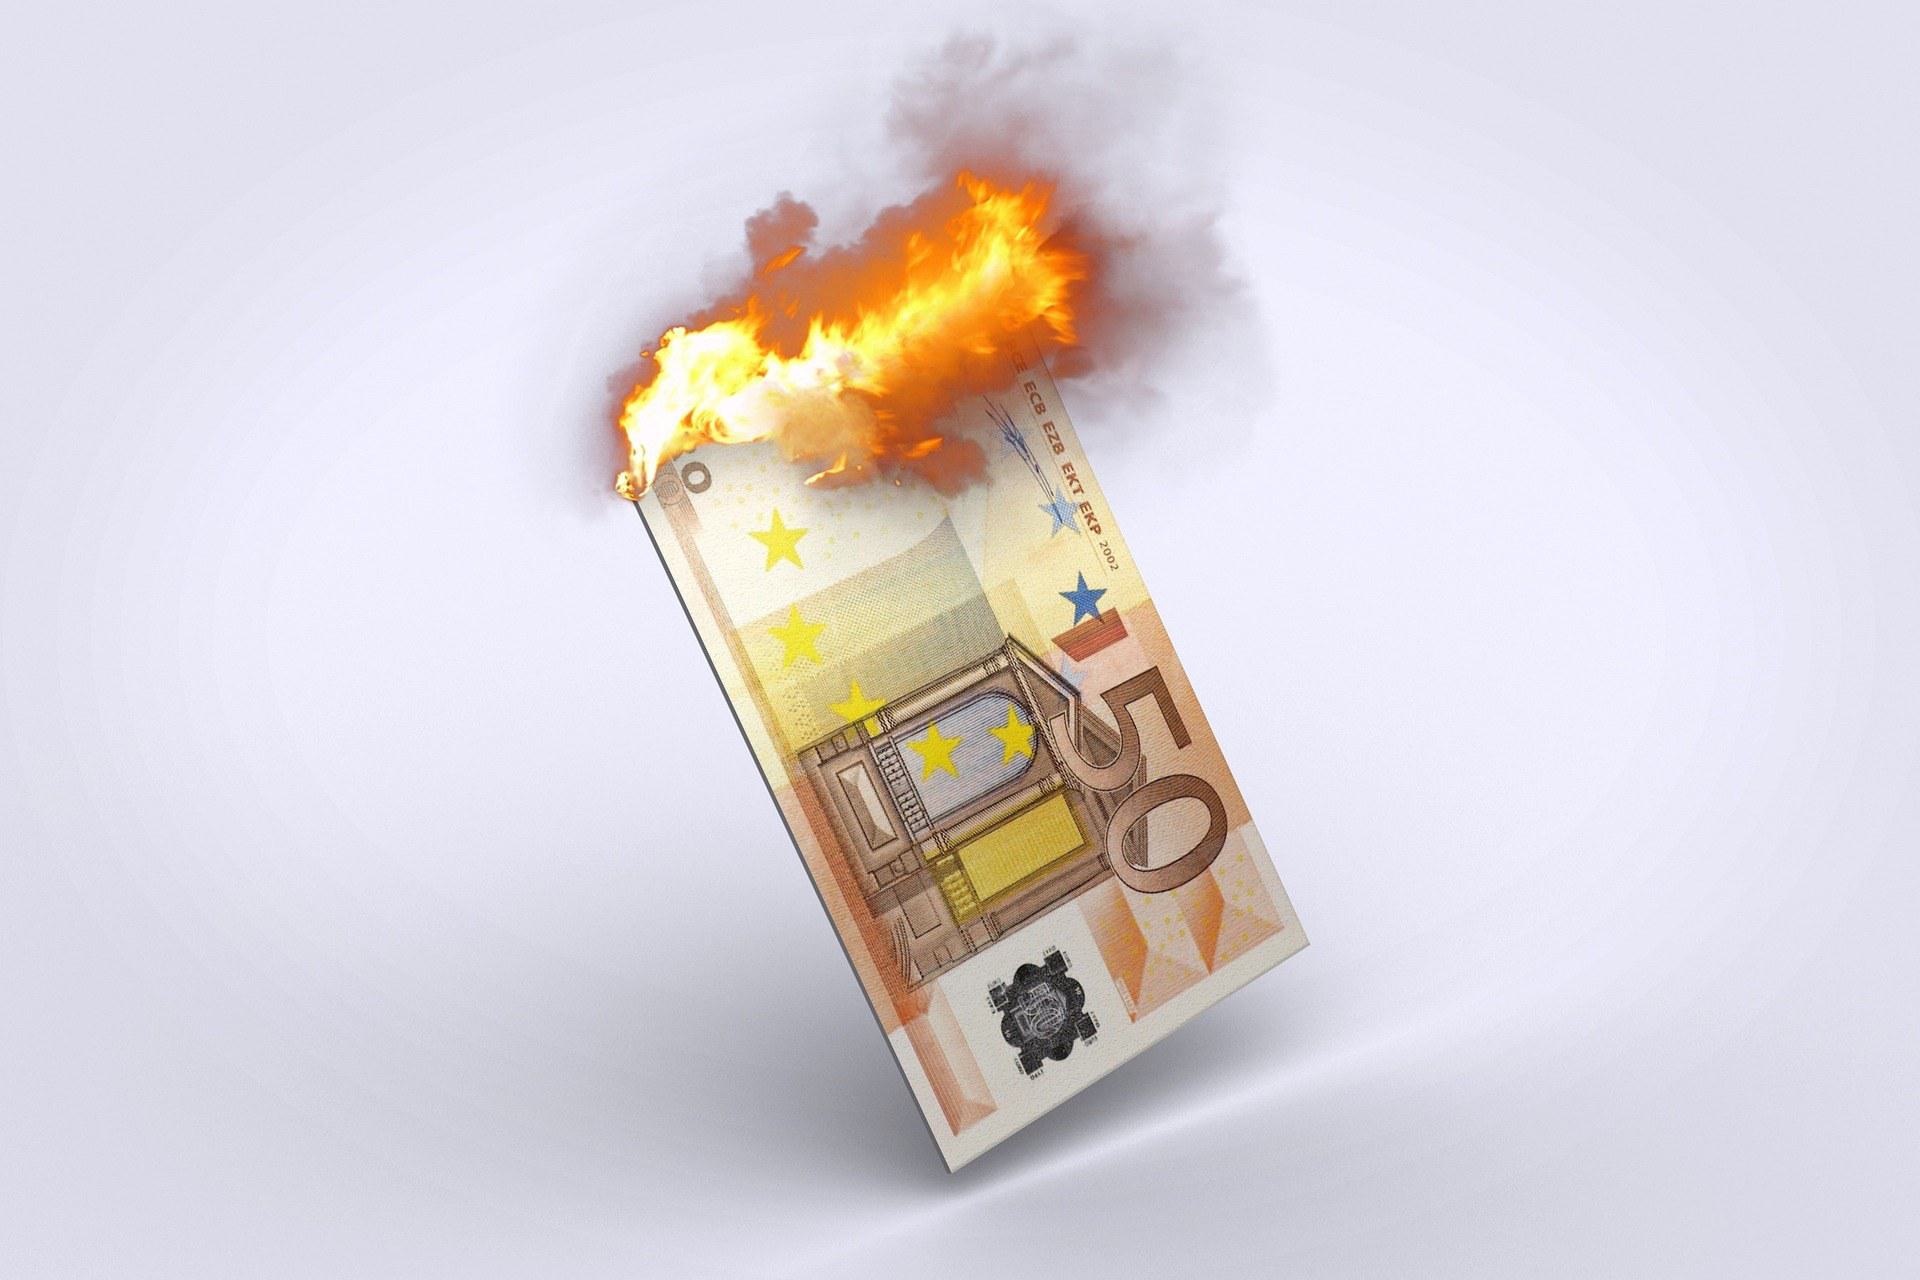 Nederland verbrandt in hoog tempo geld